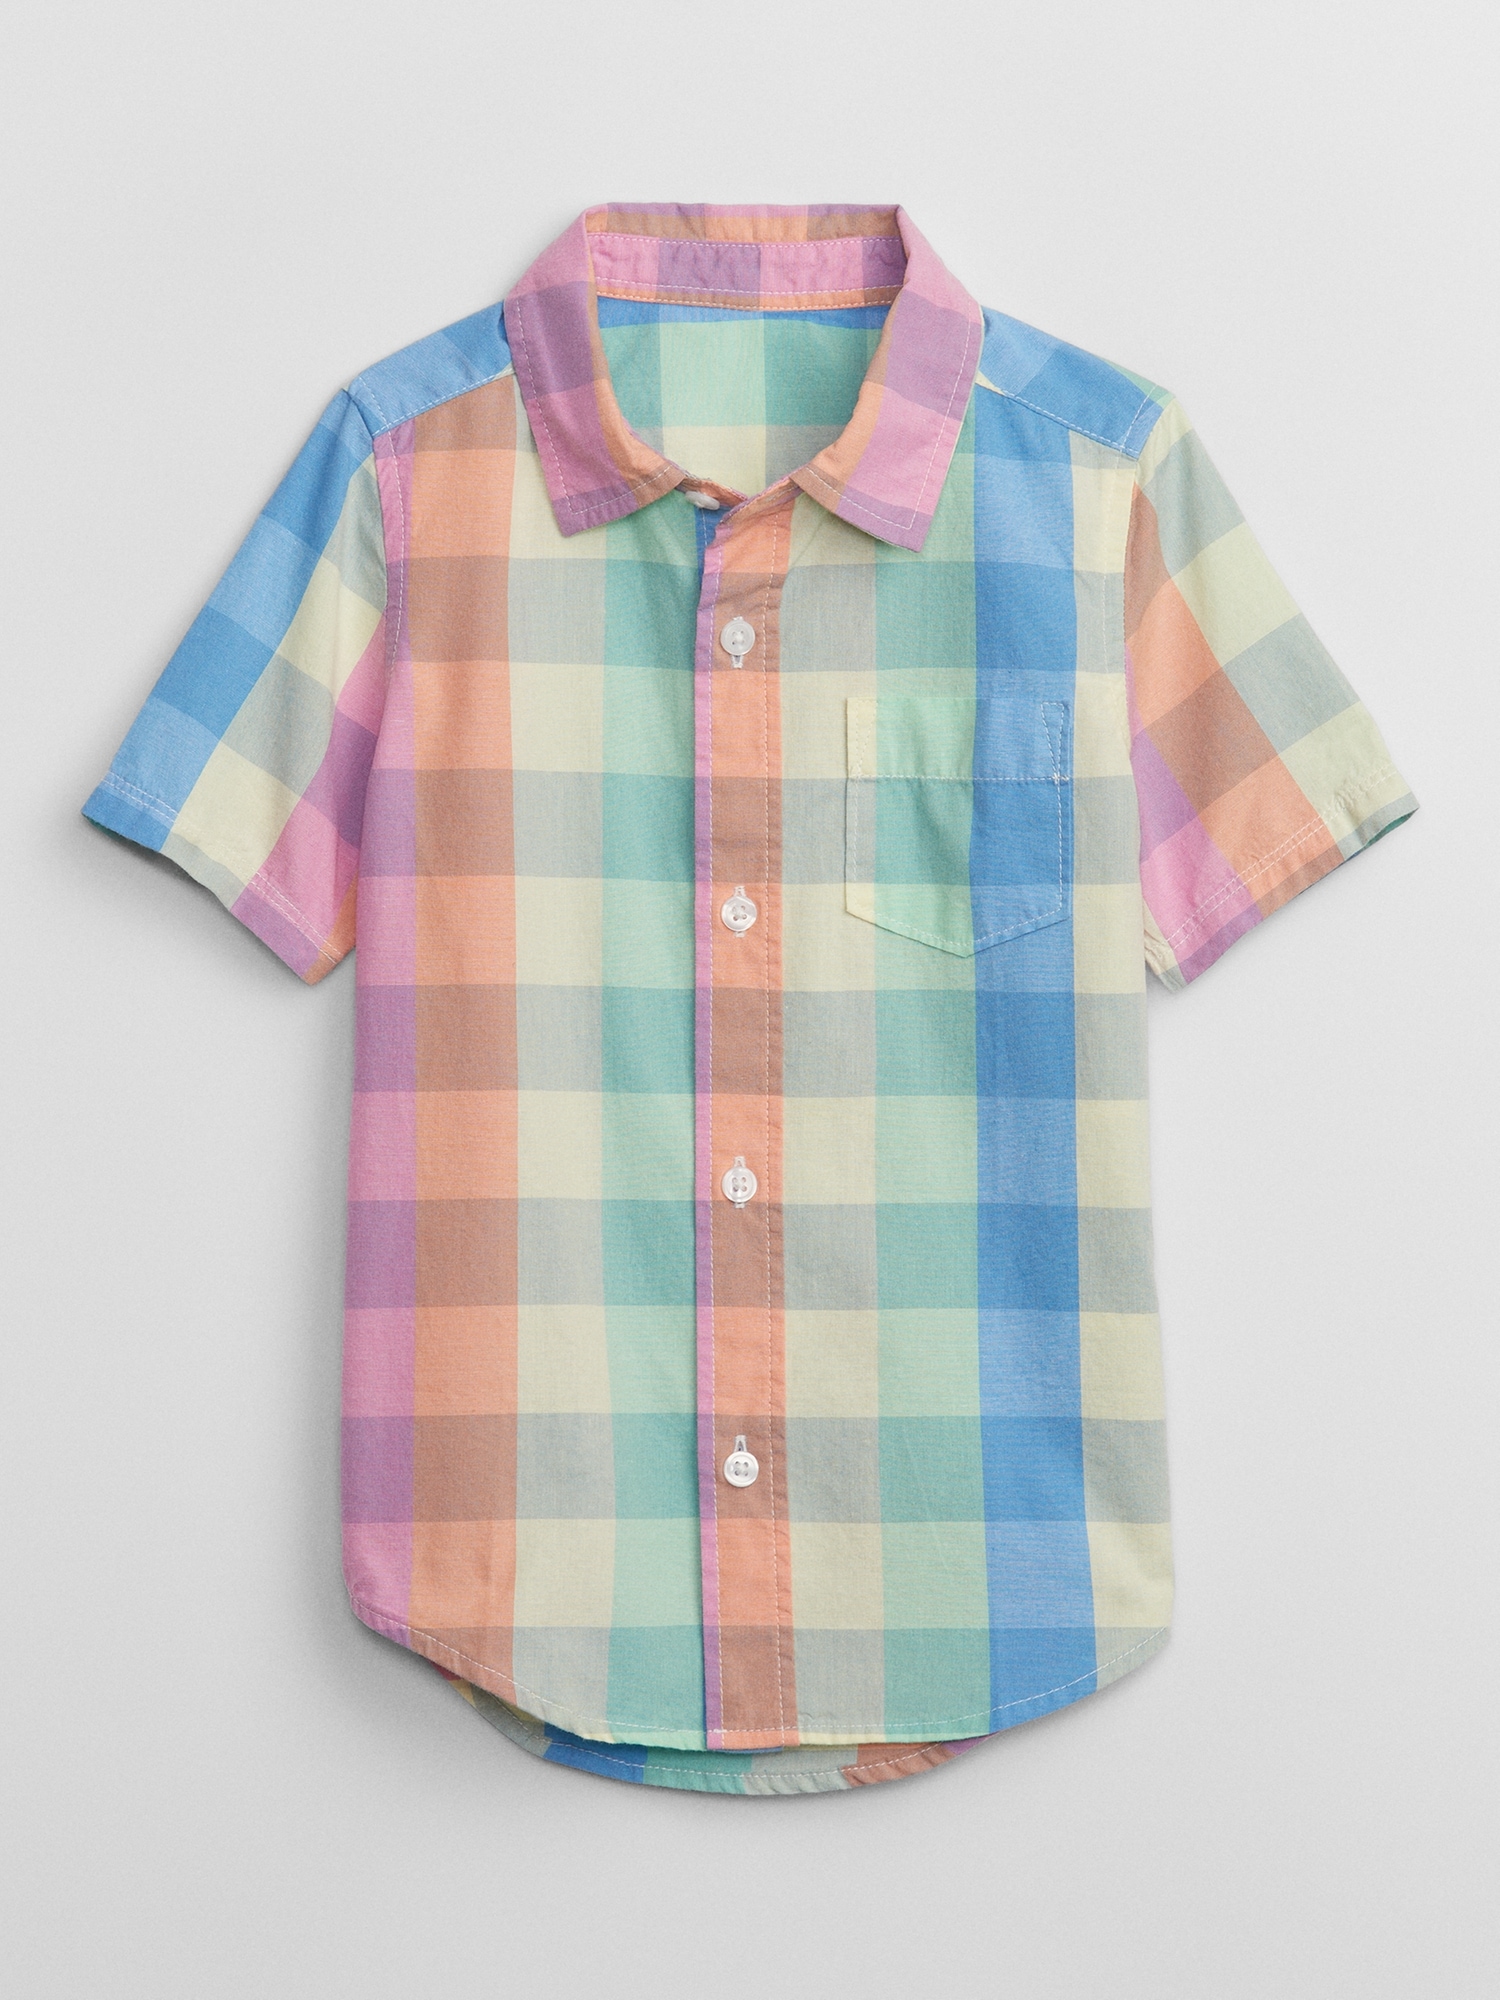 Toddler Poplin Shirt | Gap Factory